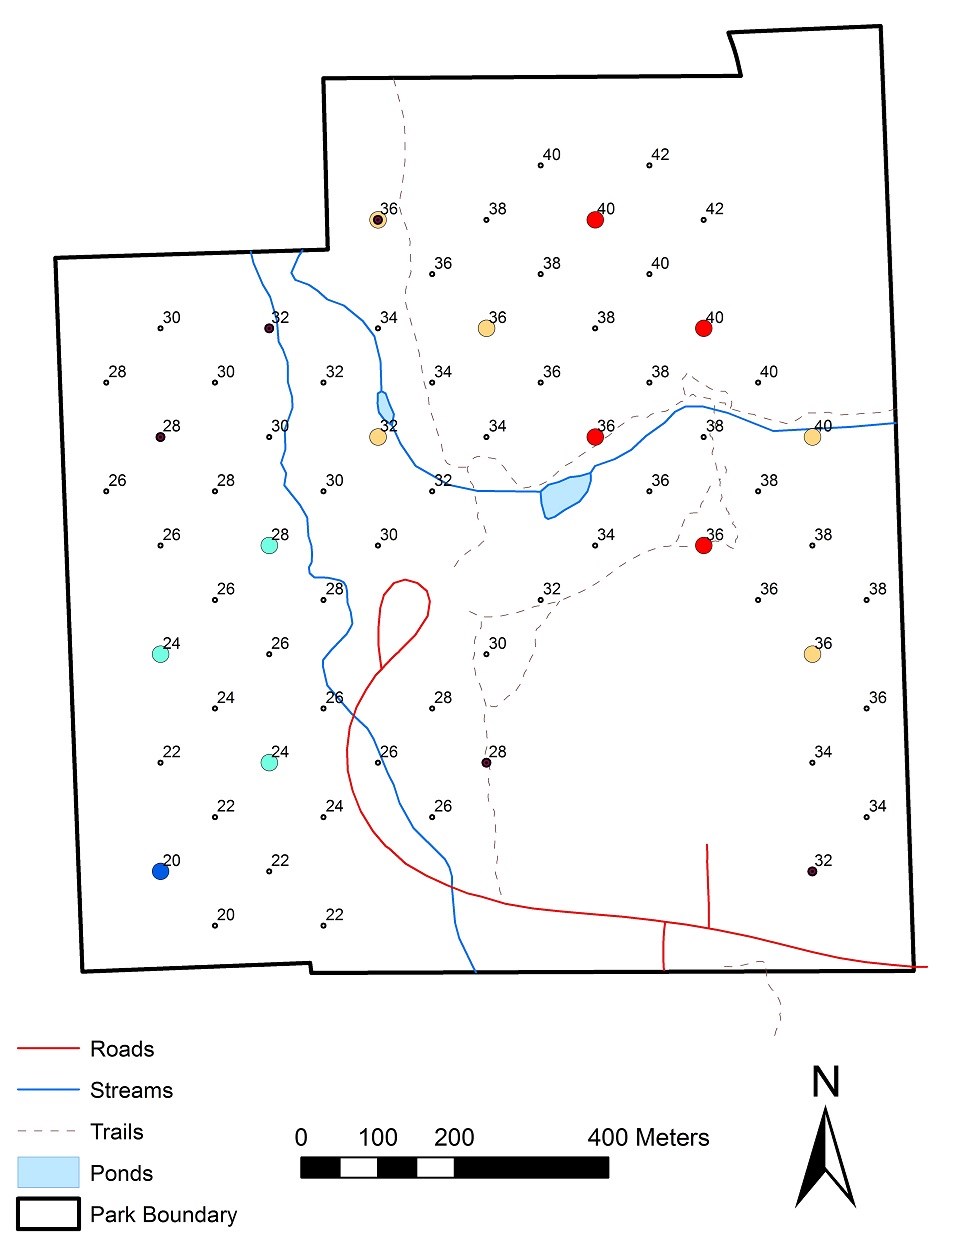 Hot Spot Analysis of volunteer bird data from Pipestone National Monument.